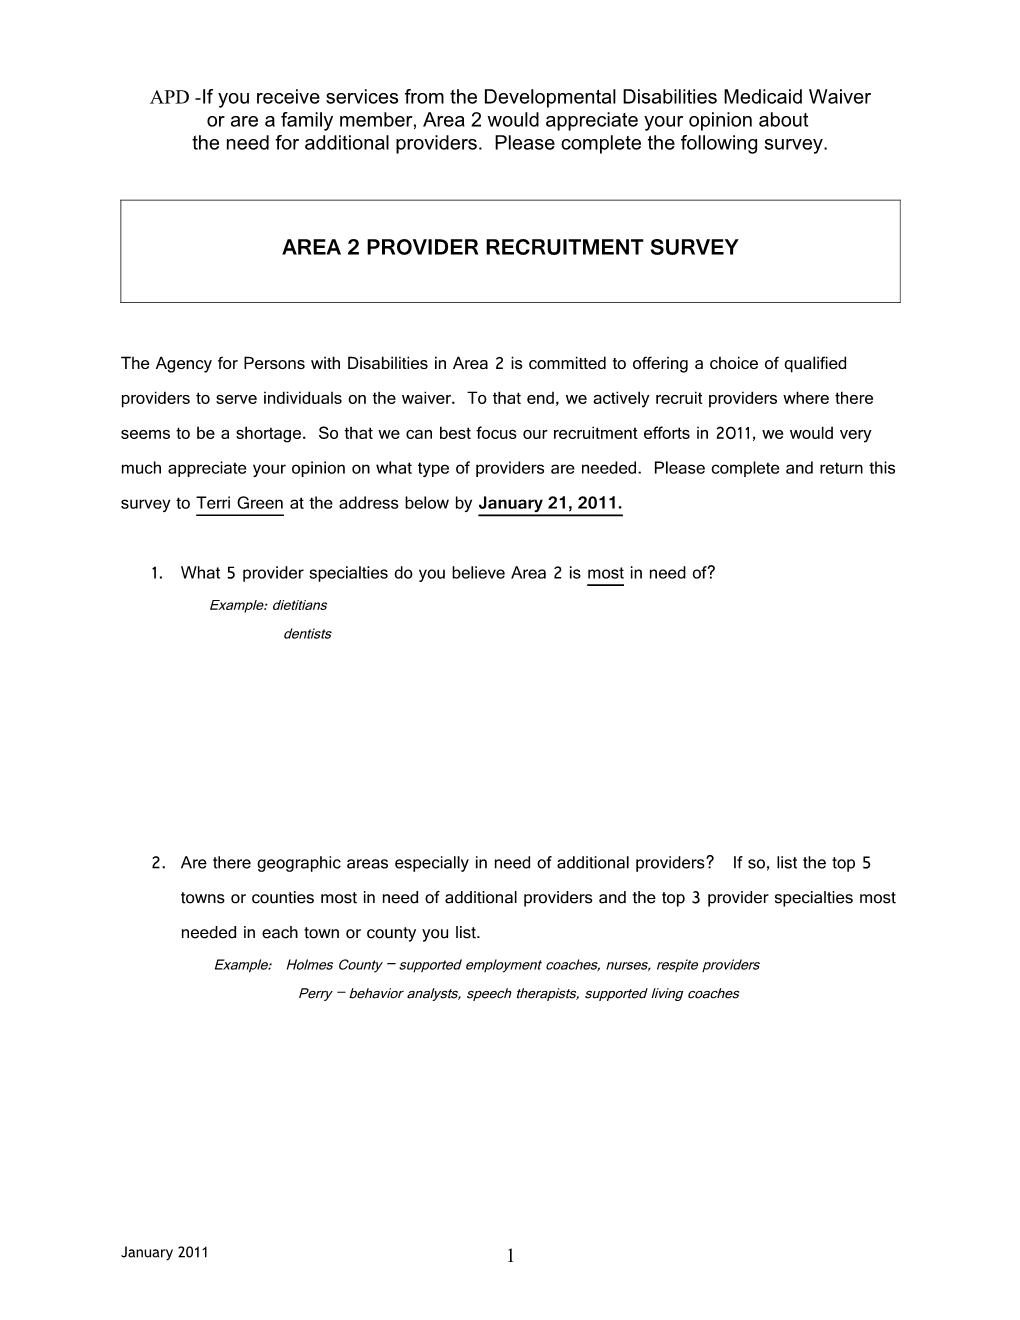 Area 2 Provider Recruitment Survey